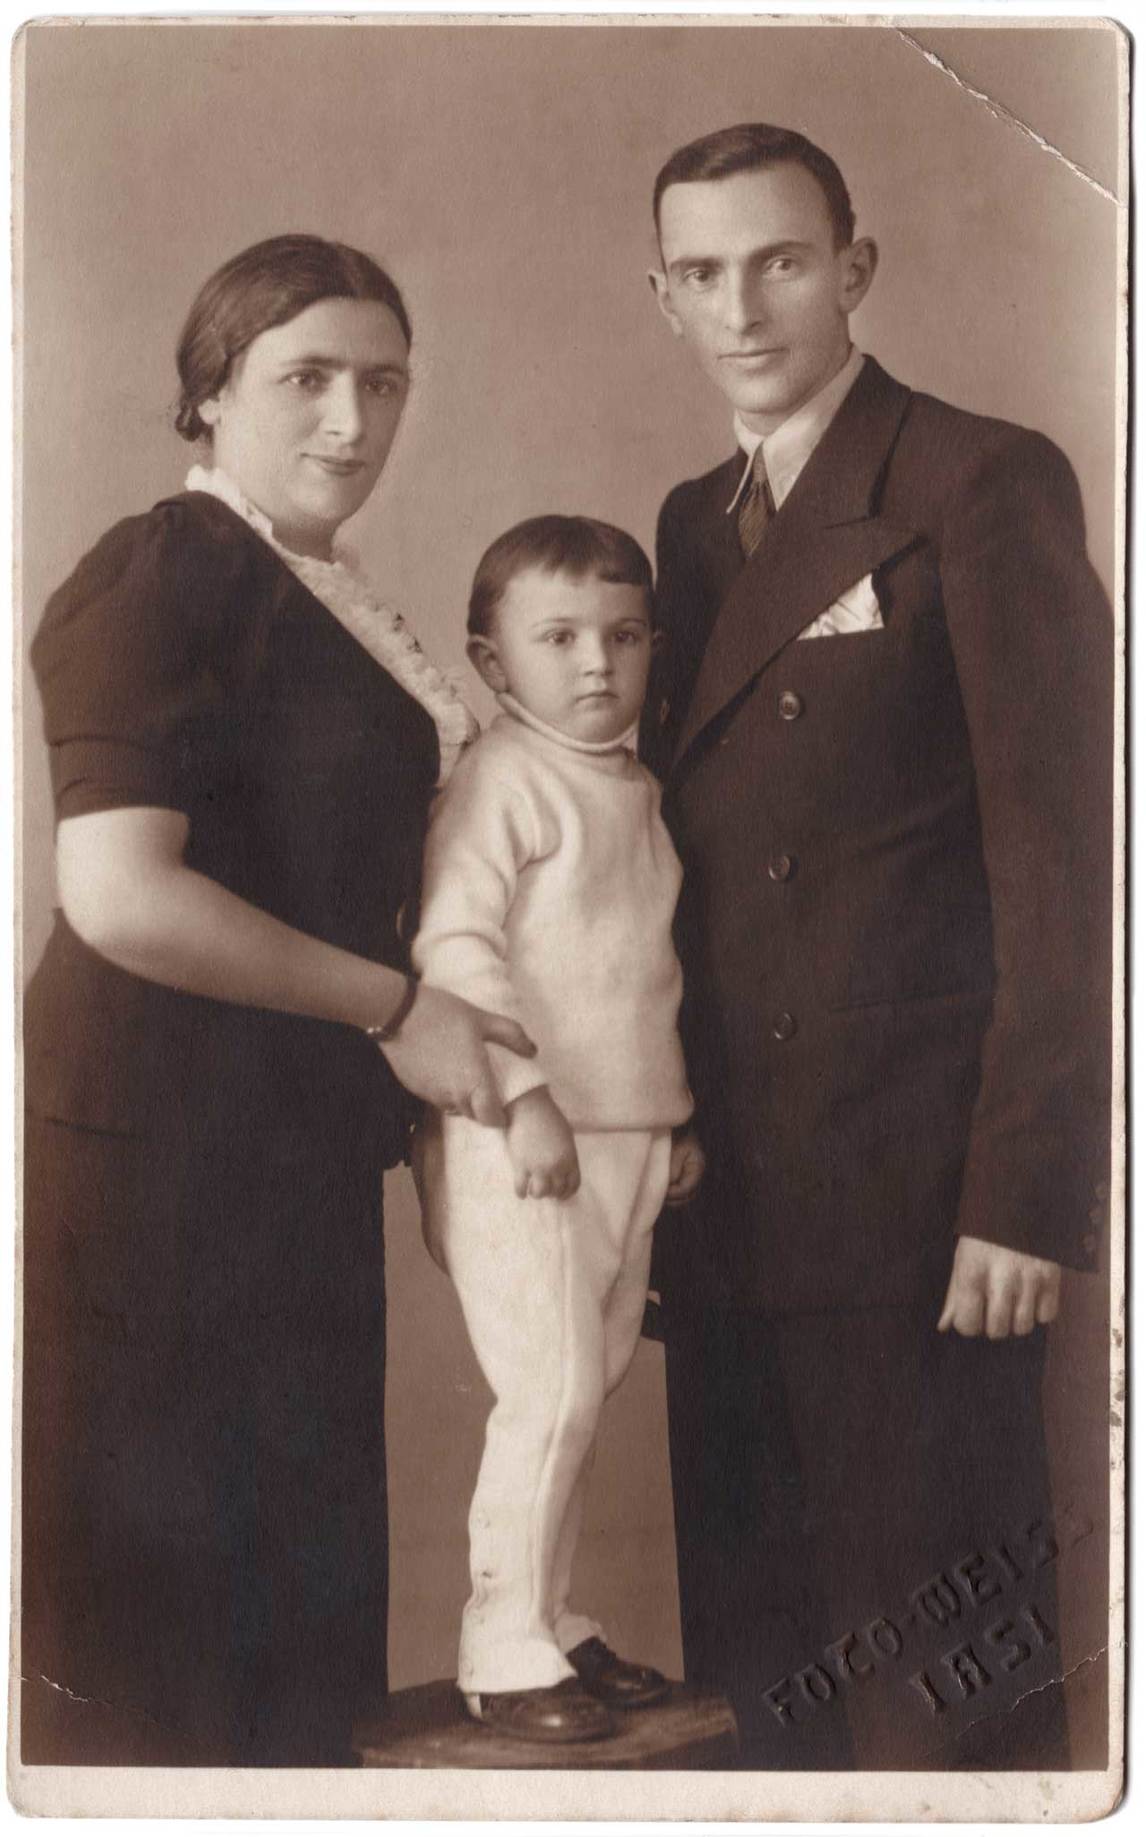 Sorel with parents Tony and Moriţ, c. 1936